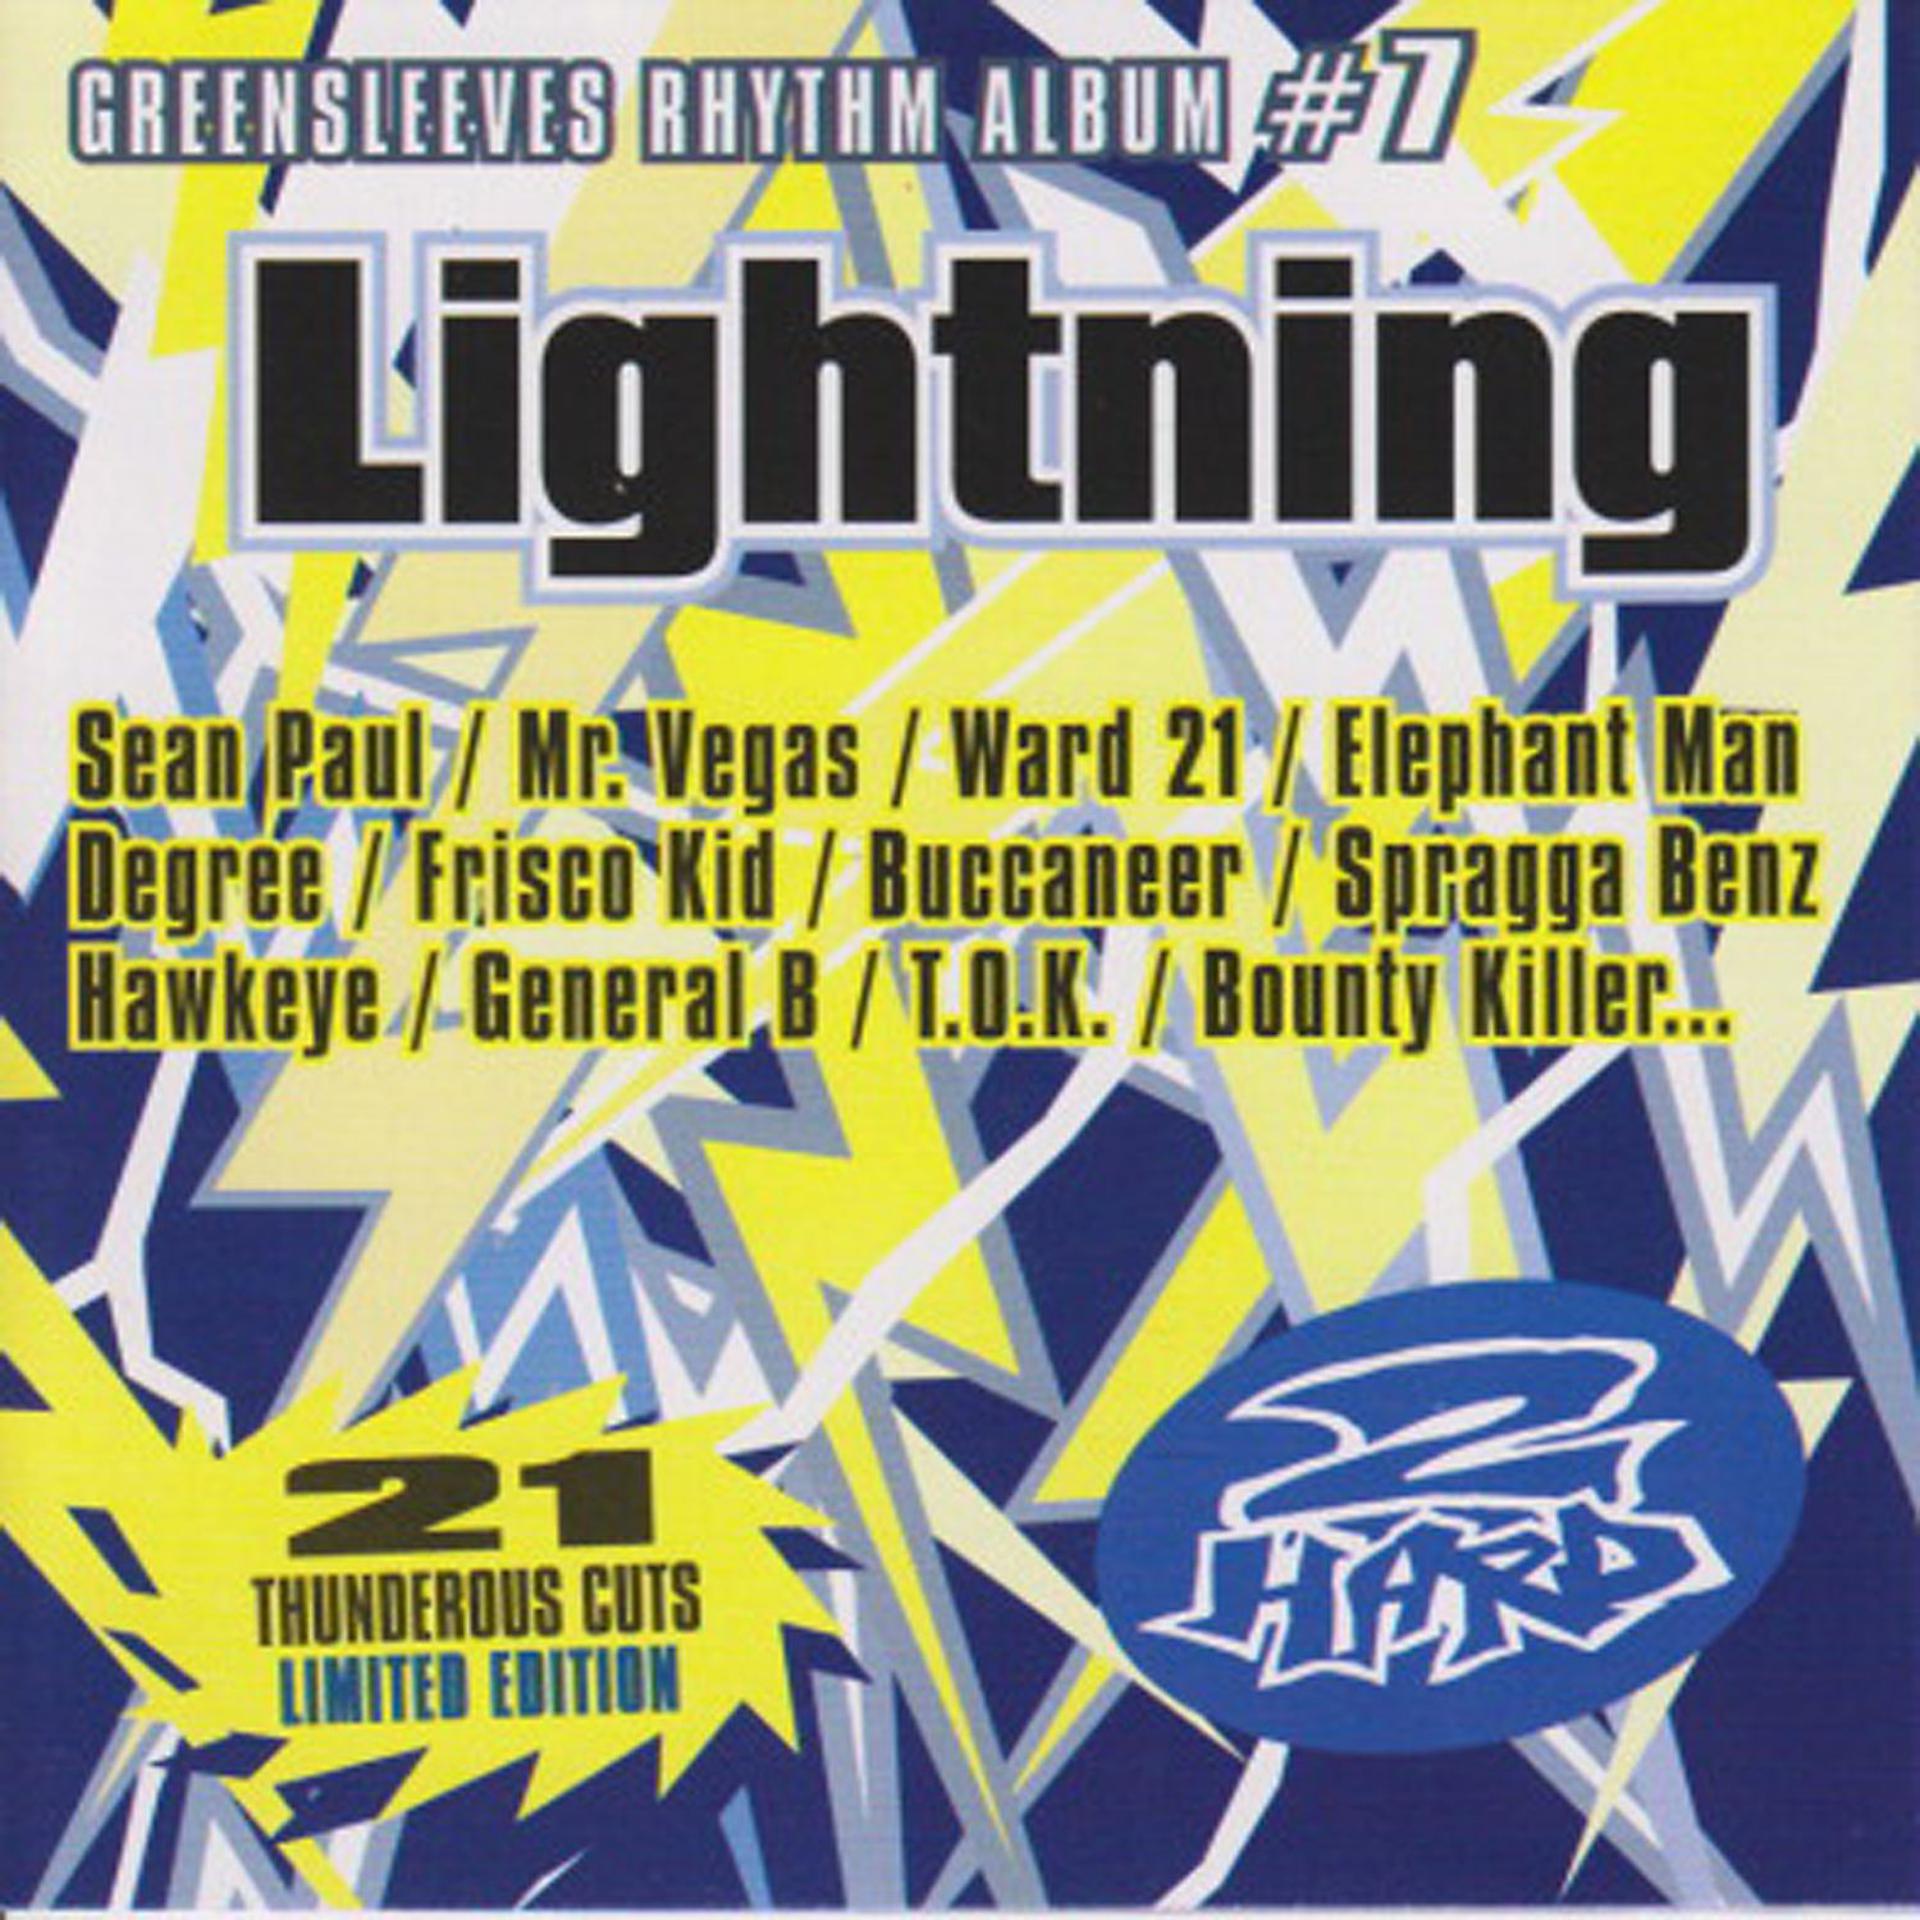 Постер альбома Greensleeves Rhythm Album #7 Lightning